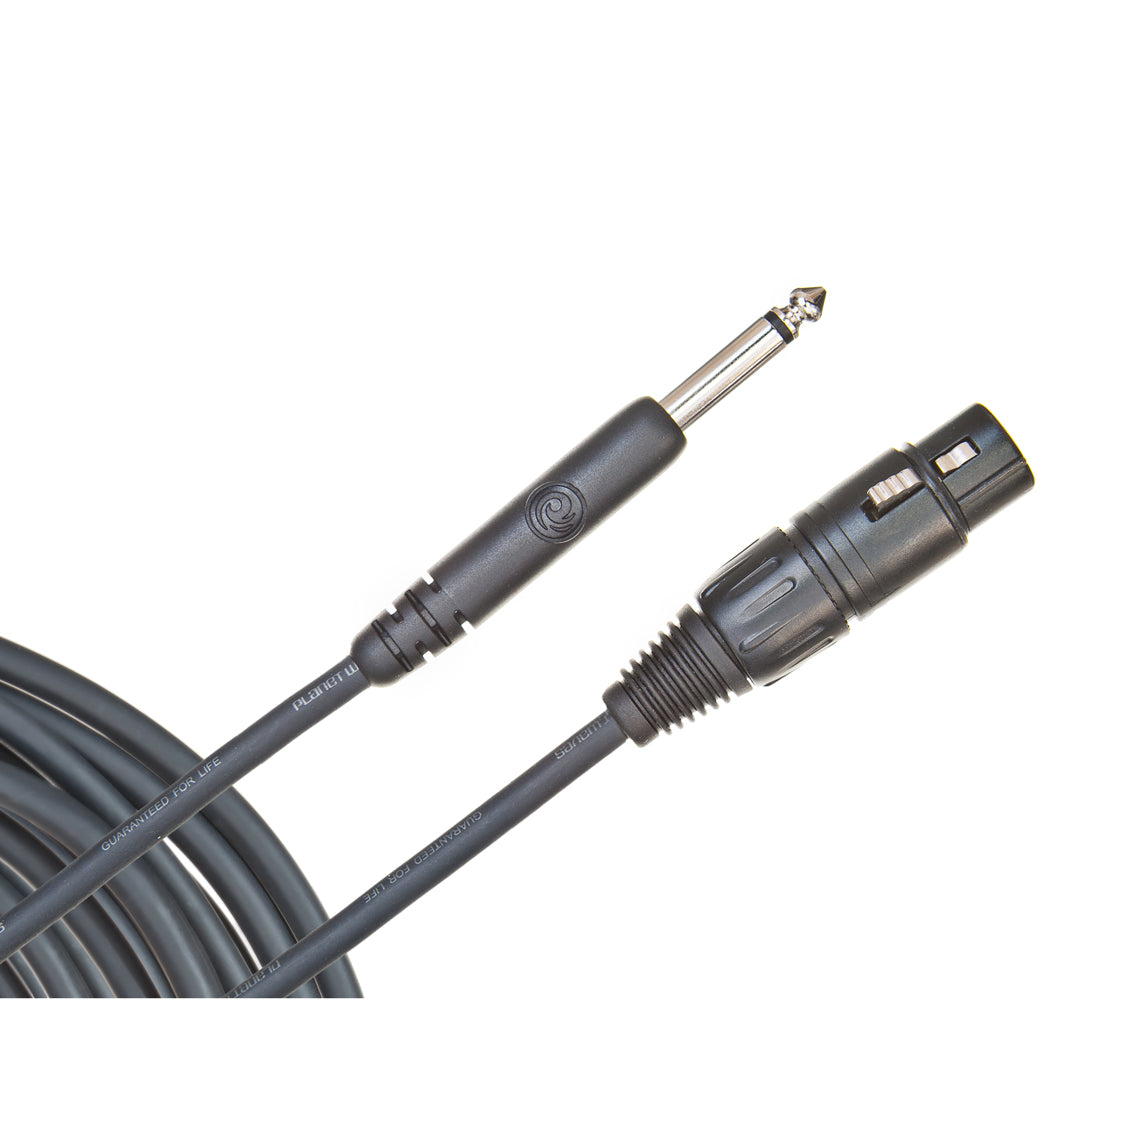 D'Addario Classic Series Unbalanced Microphone Cable XLR-to-1/4-inch 25 feet